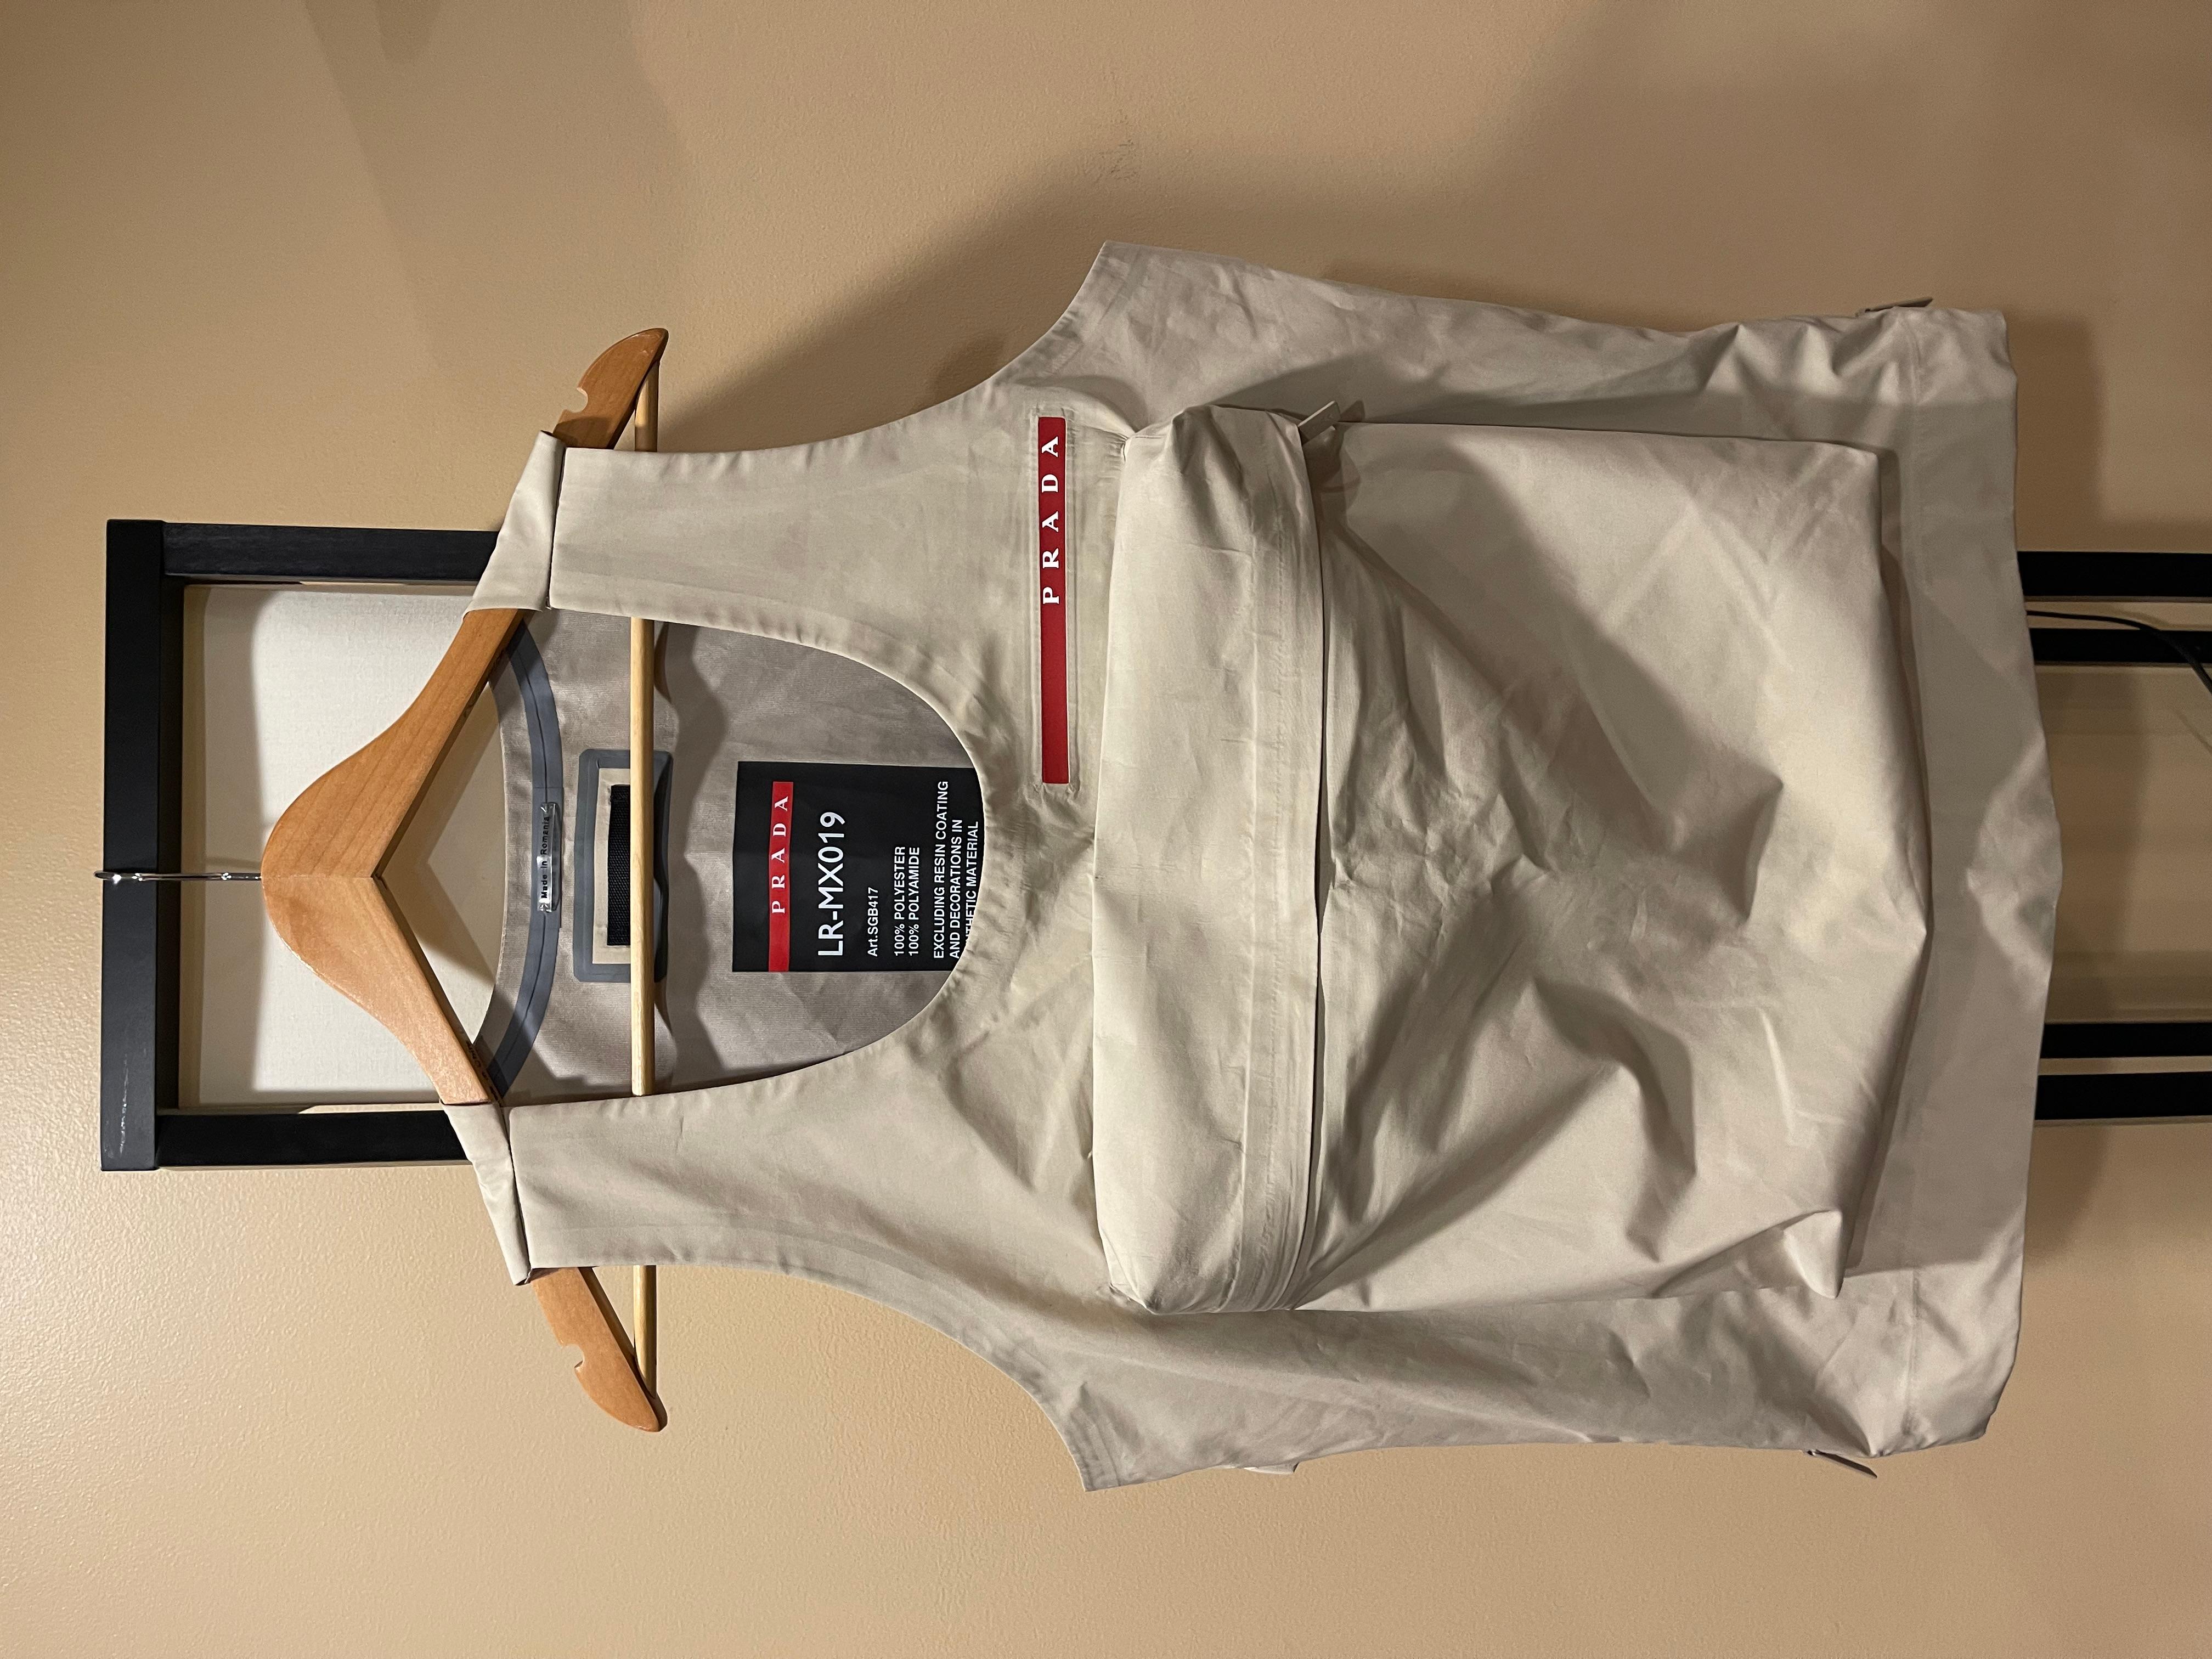 Prada Linea Rossa Cargo Pocket Tan/Beige Vest size Small 6